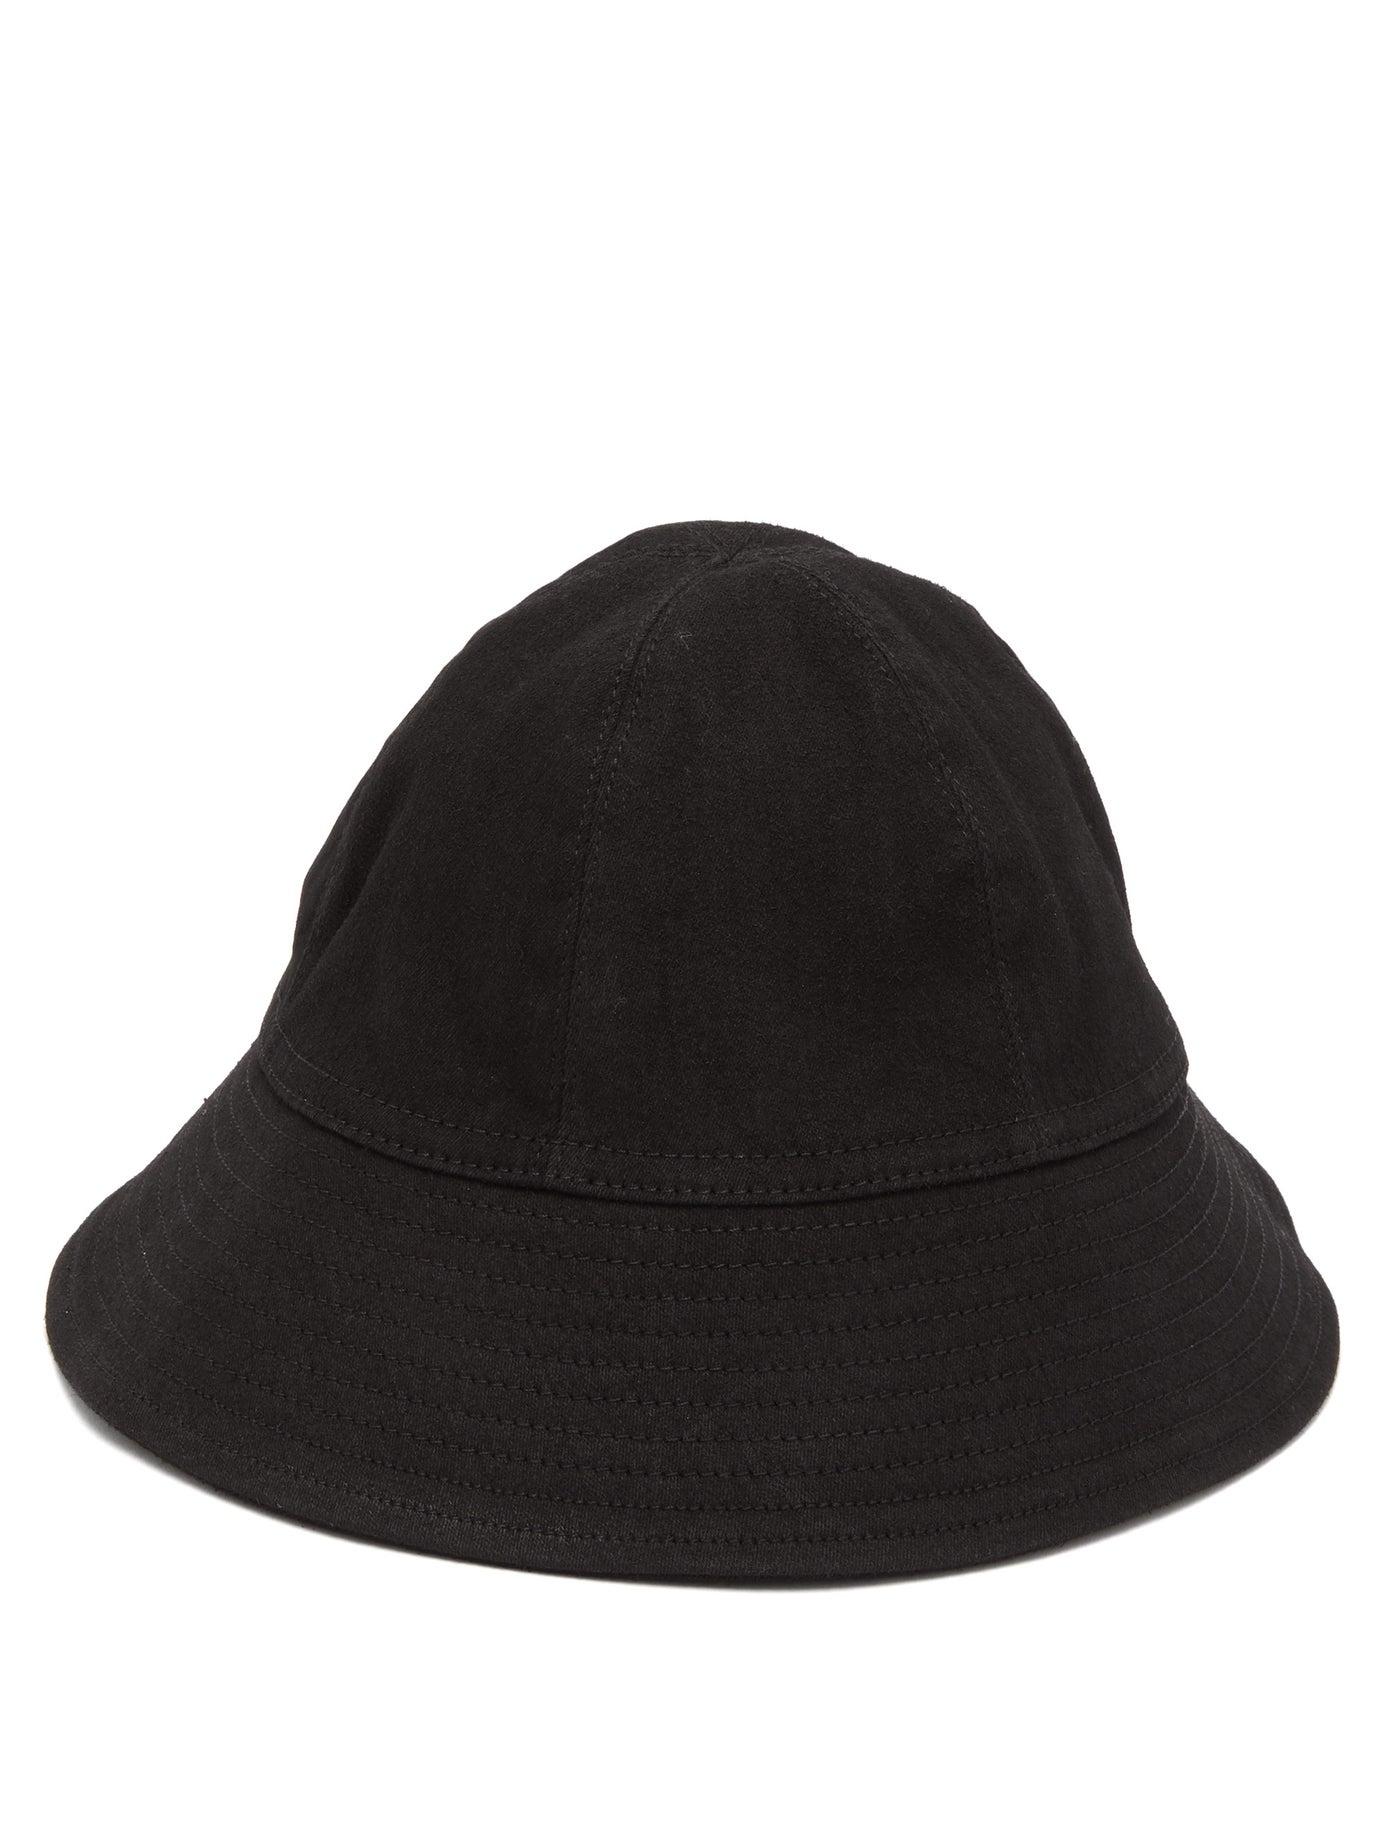 Rick Owens Drkshdw Gilligan Cotton Blend Bucket Hat in Black for Men - Lyst